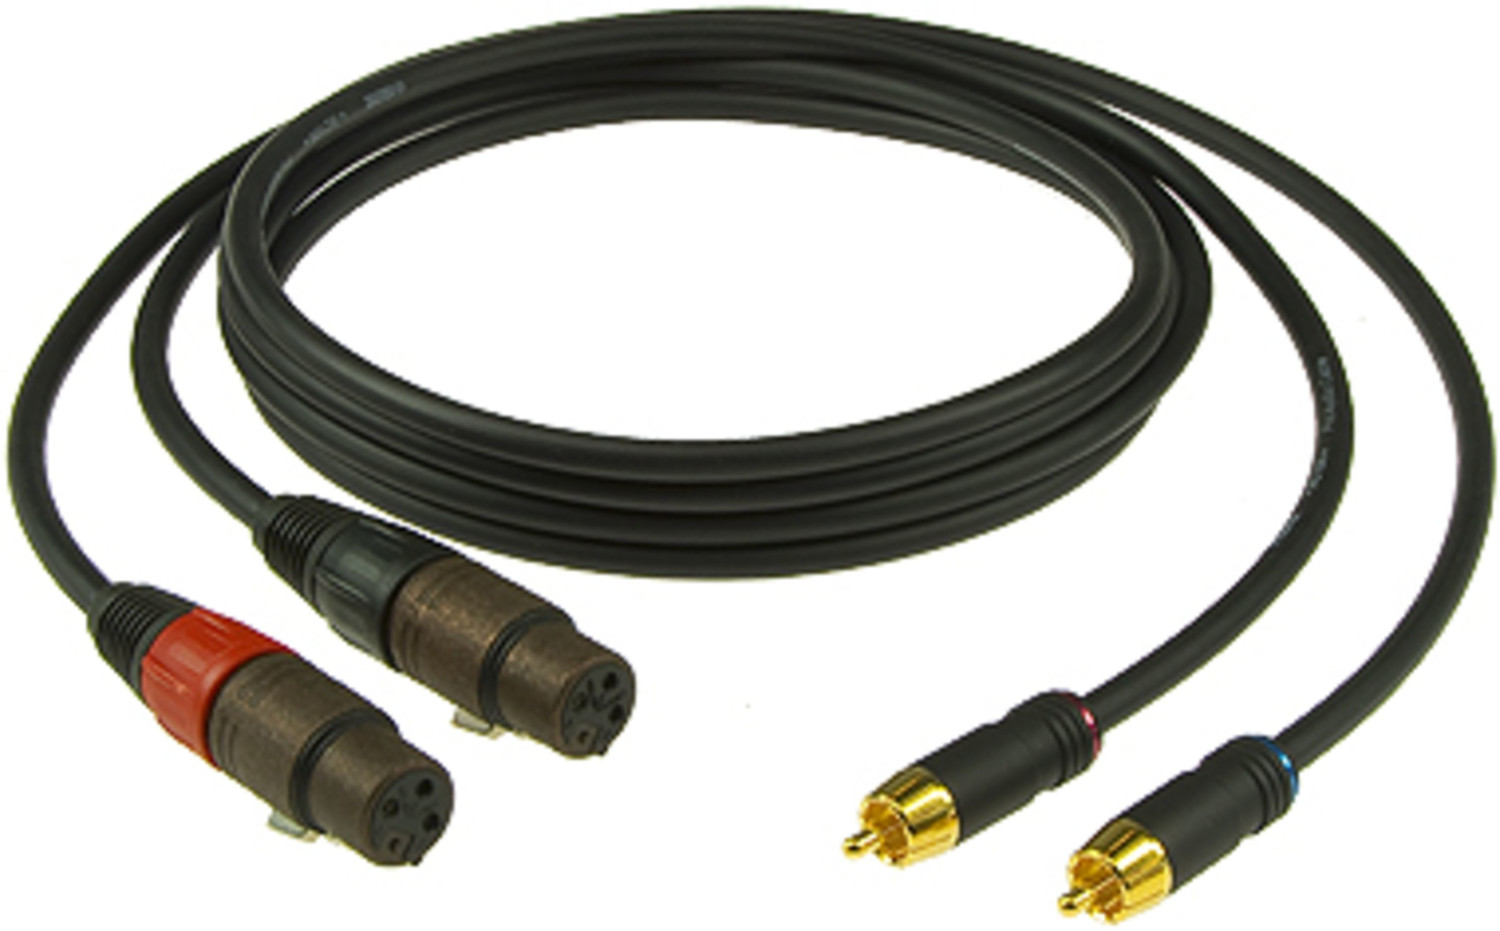 Photos - Cable (video, audio, USB) Klotz a-i-s Klotz AL-RF0150 Audiokabel XLR female Cinch Stecker 1,5m, 2 St